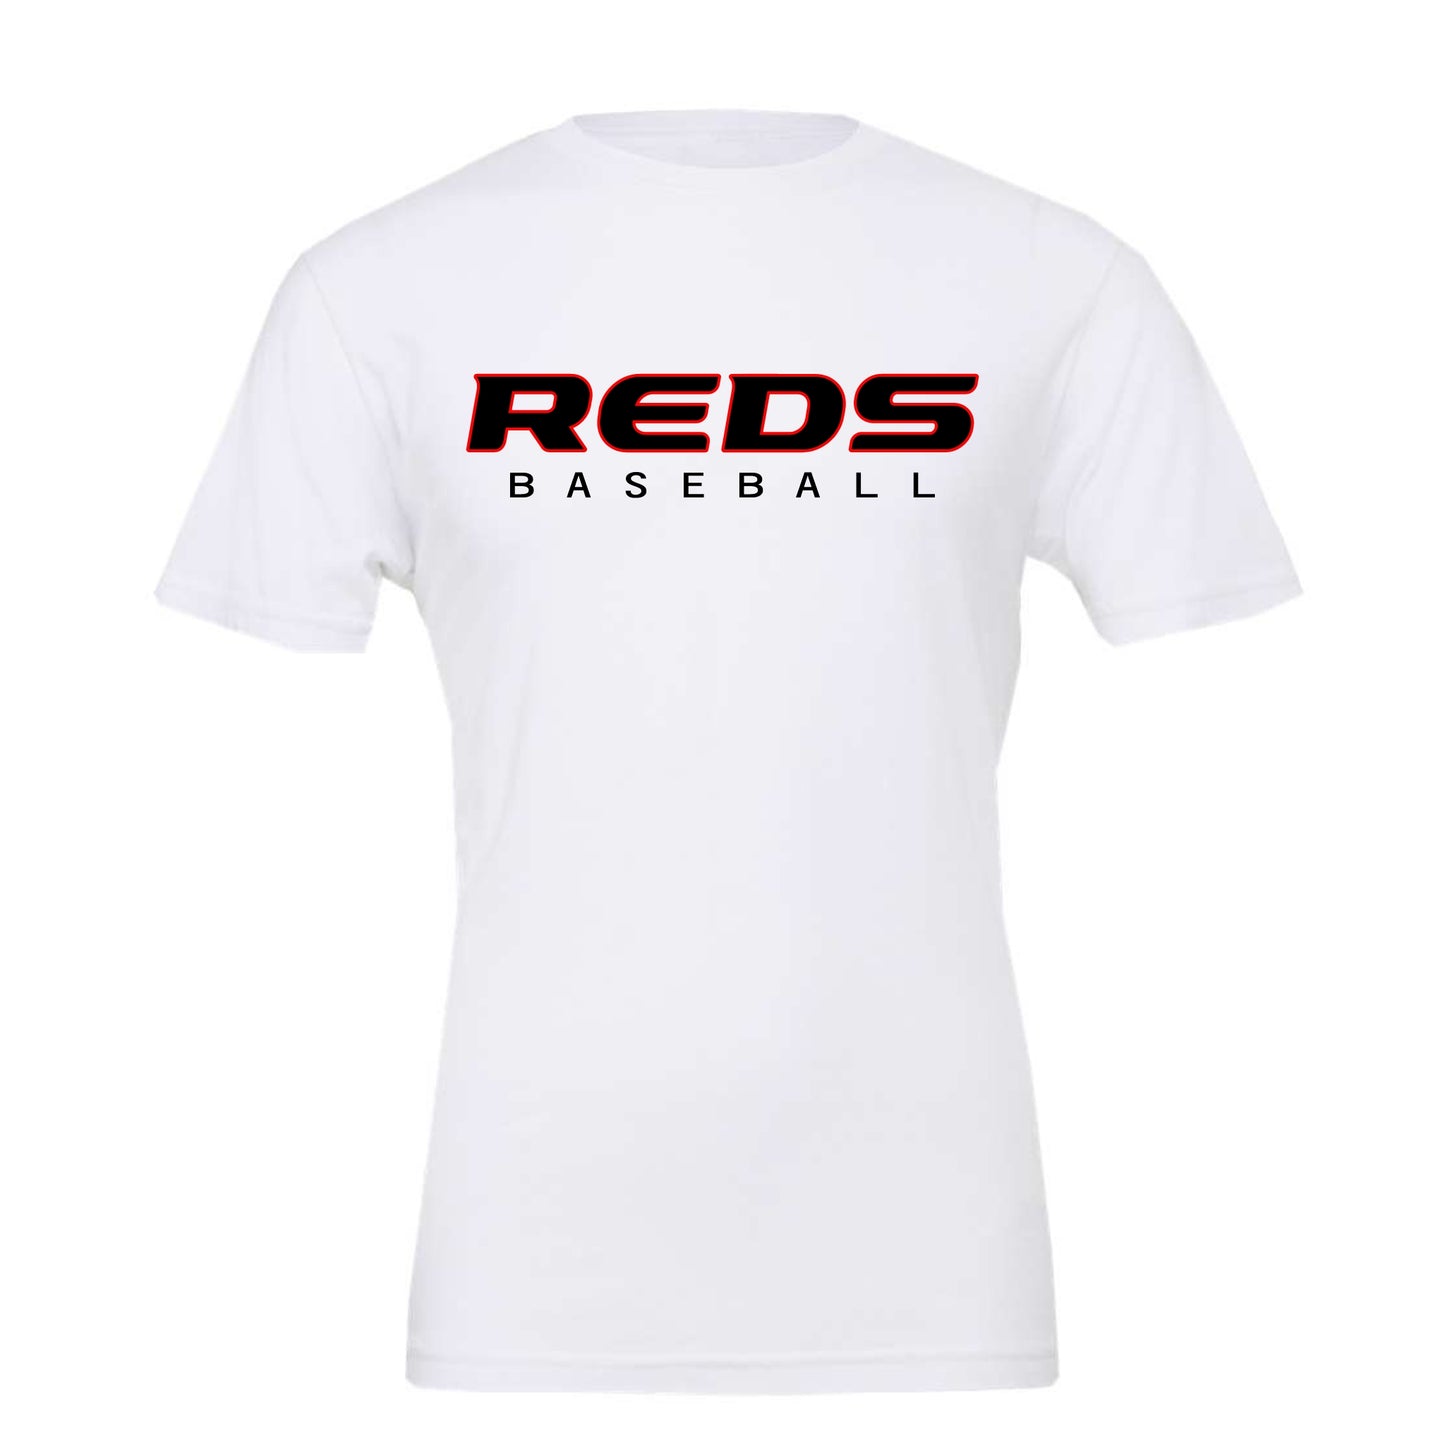 Reds Baseball Next Level Youth Premium Tee